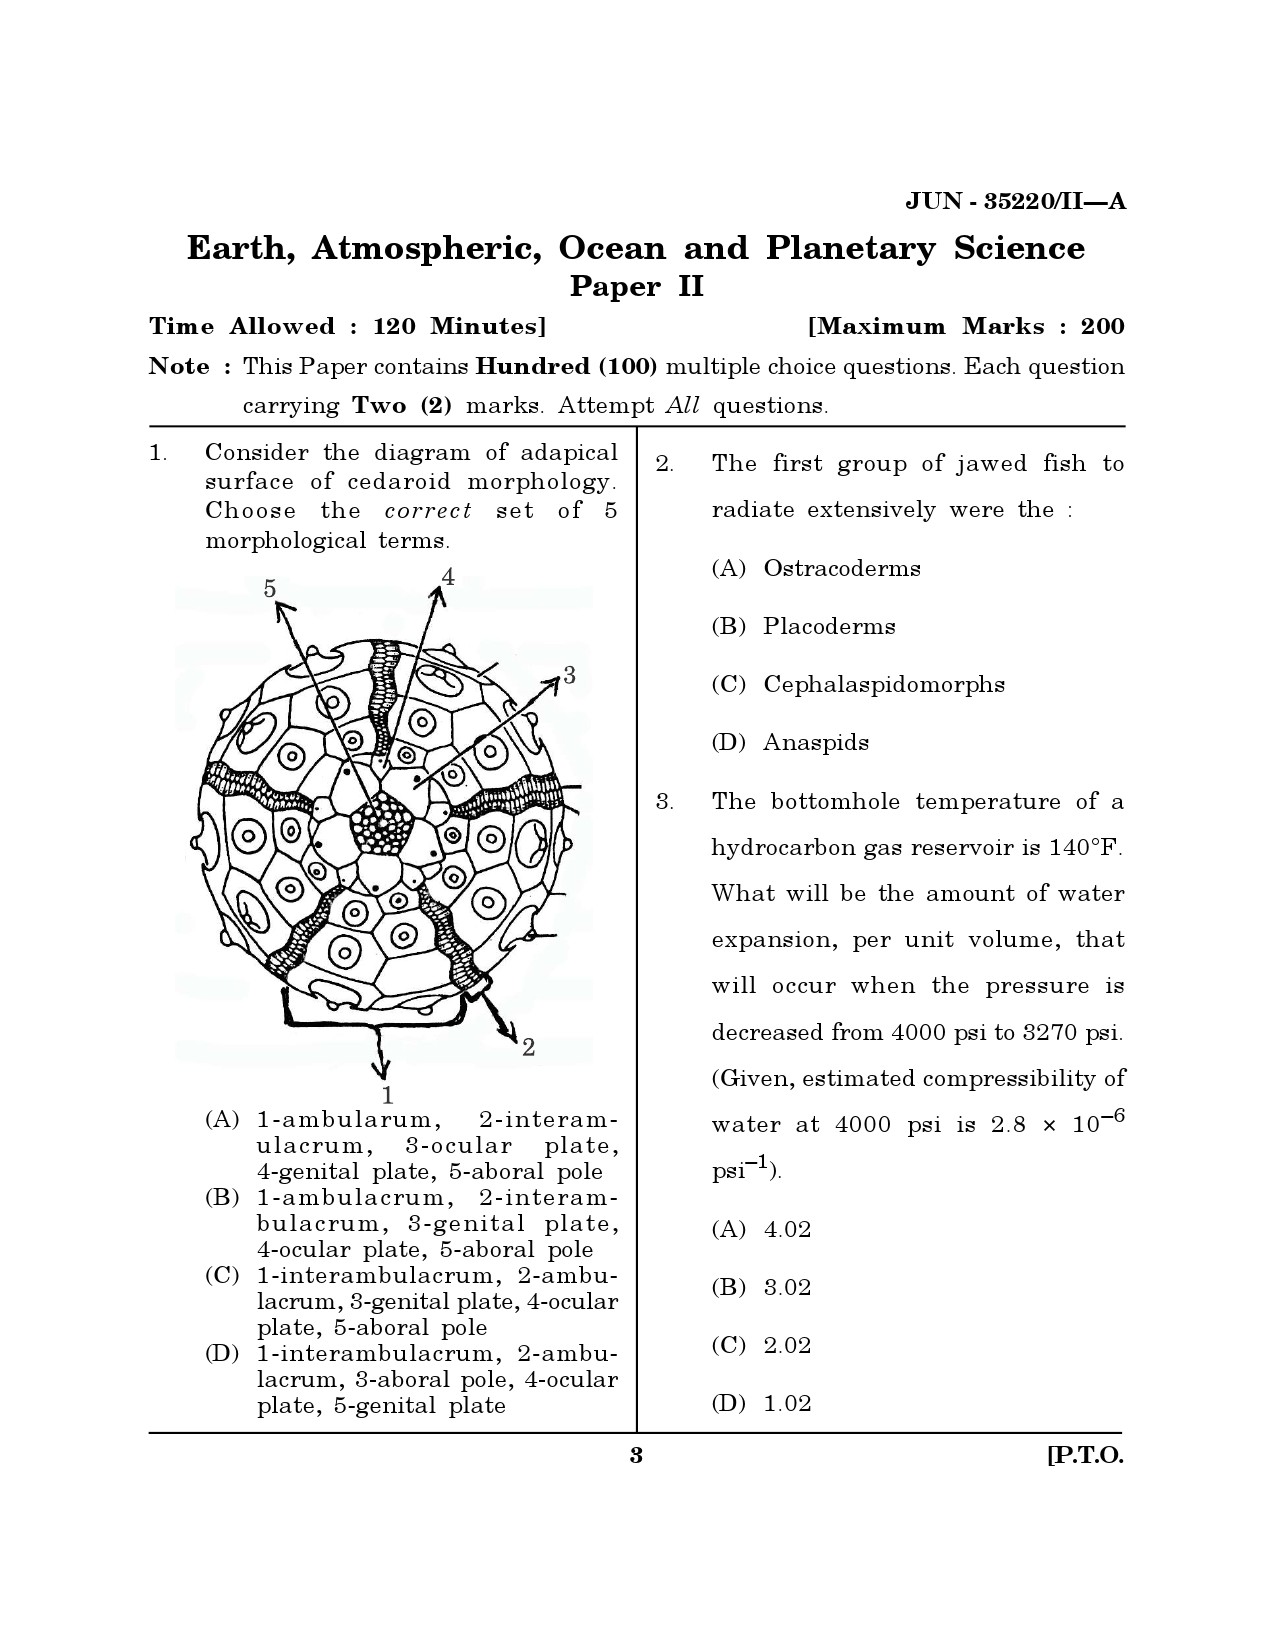 Maharashtra SET Earth Atmospheric Ocean Planetary Science Question Paper II June 2020 2